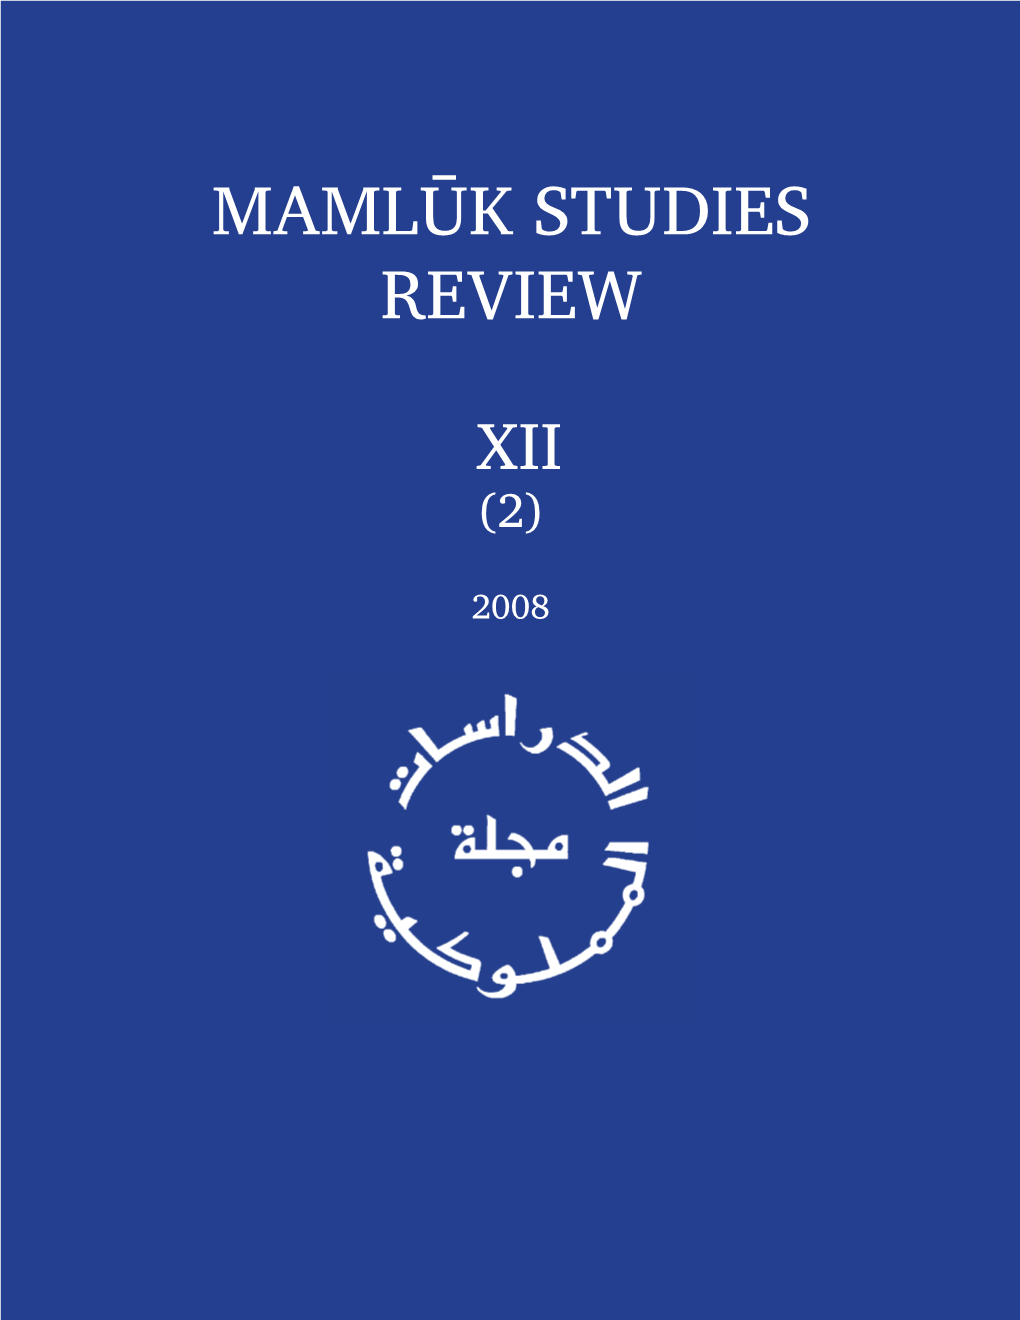 Mamluk Studies Review Vol. XII, No. 2 (2008)